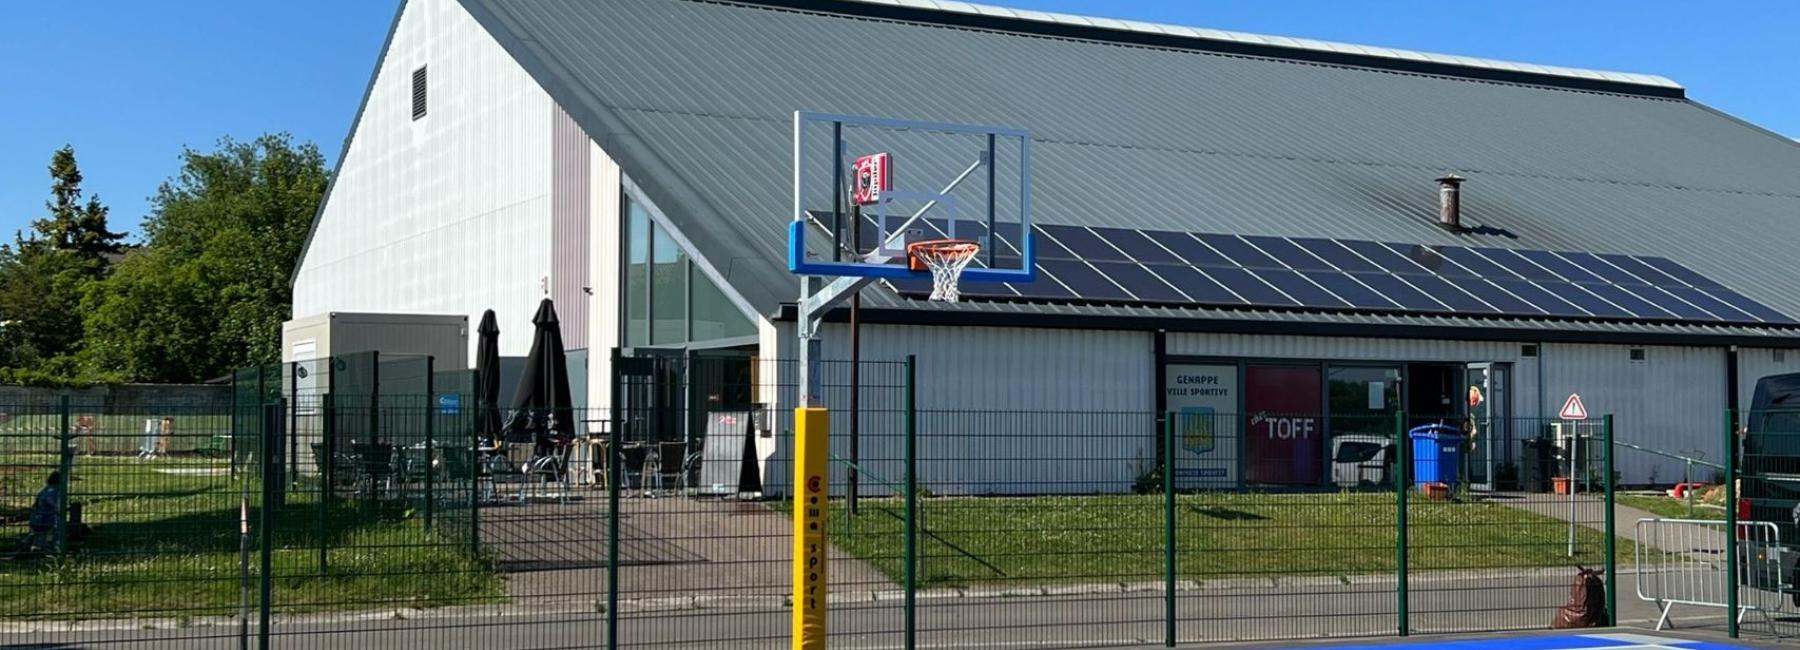 3X3 Basketbalveld - Sportcentrum Genappe